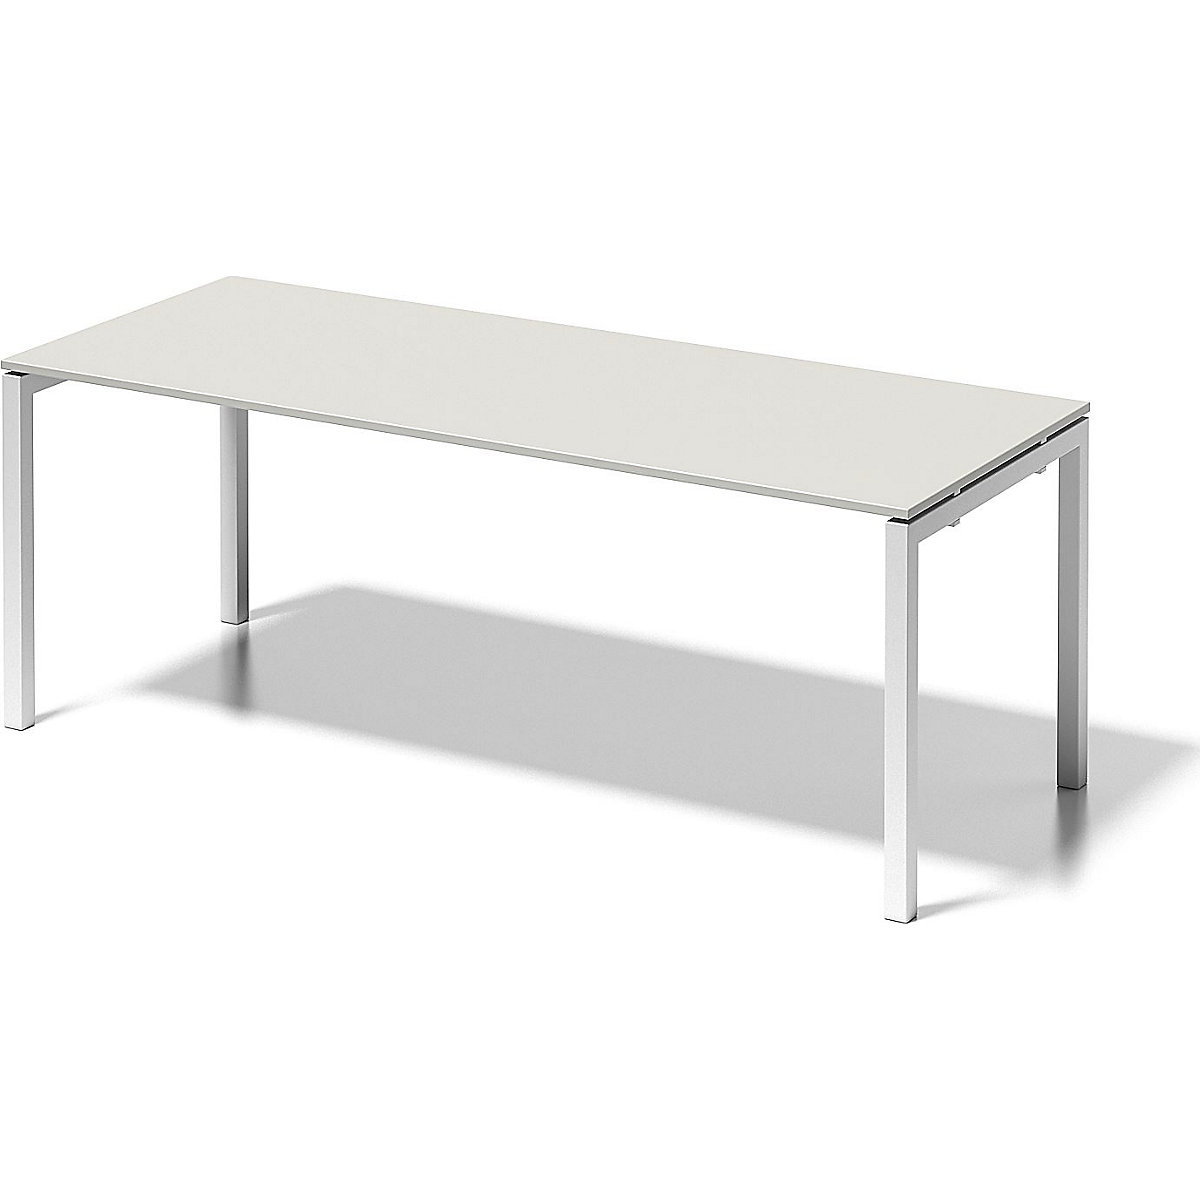 CITO desk, U-frame – BISLEY, HxWxD 740 x 2000 x 800 mm, white frame, grey white tabletop-6